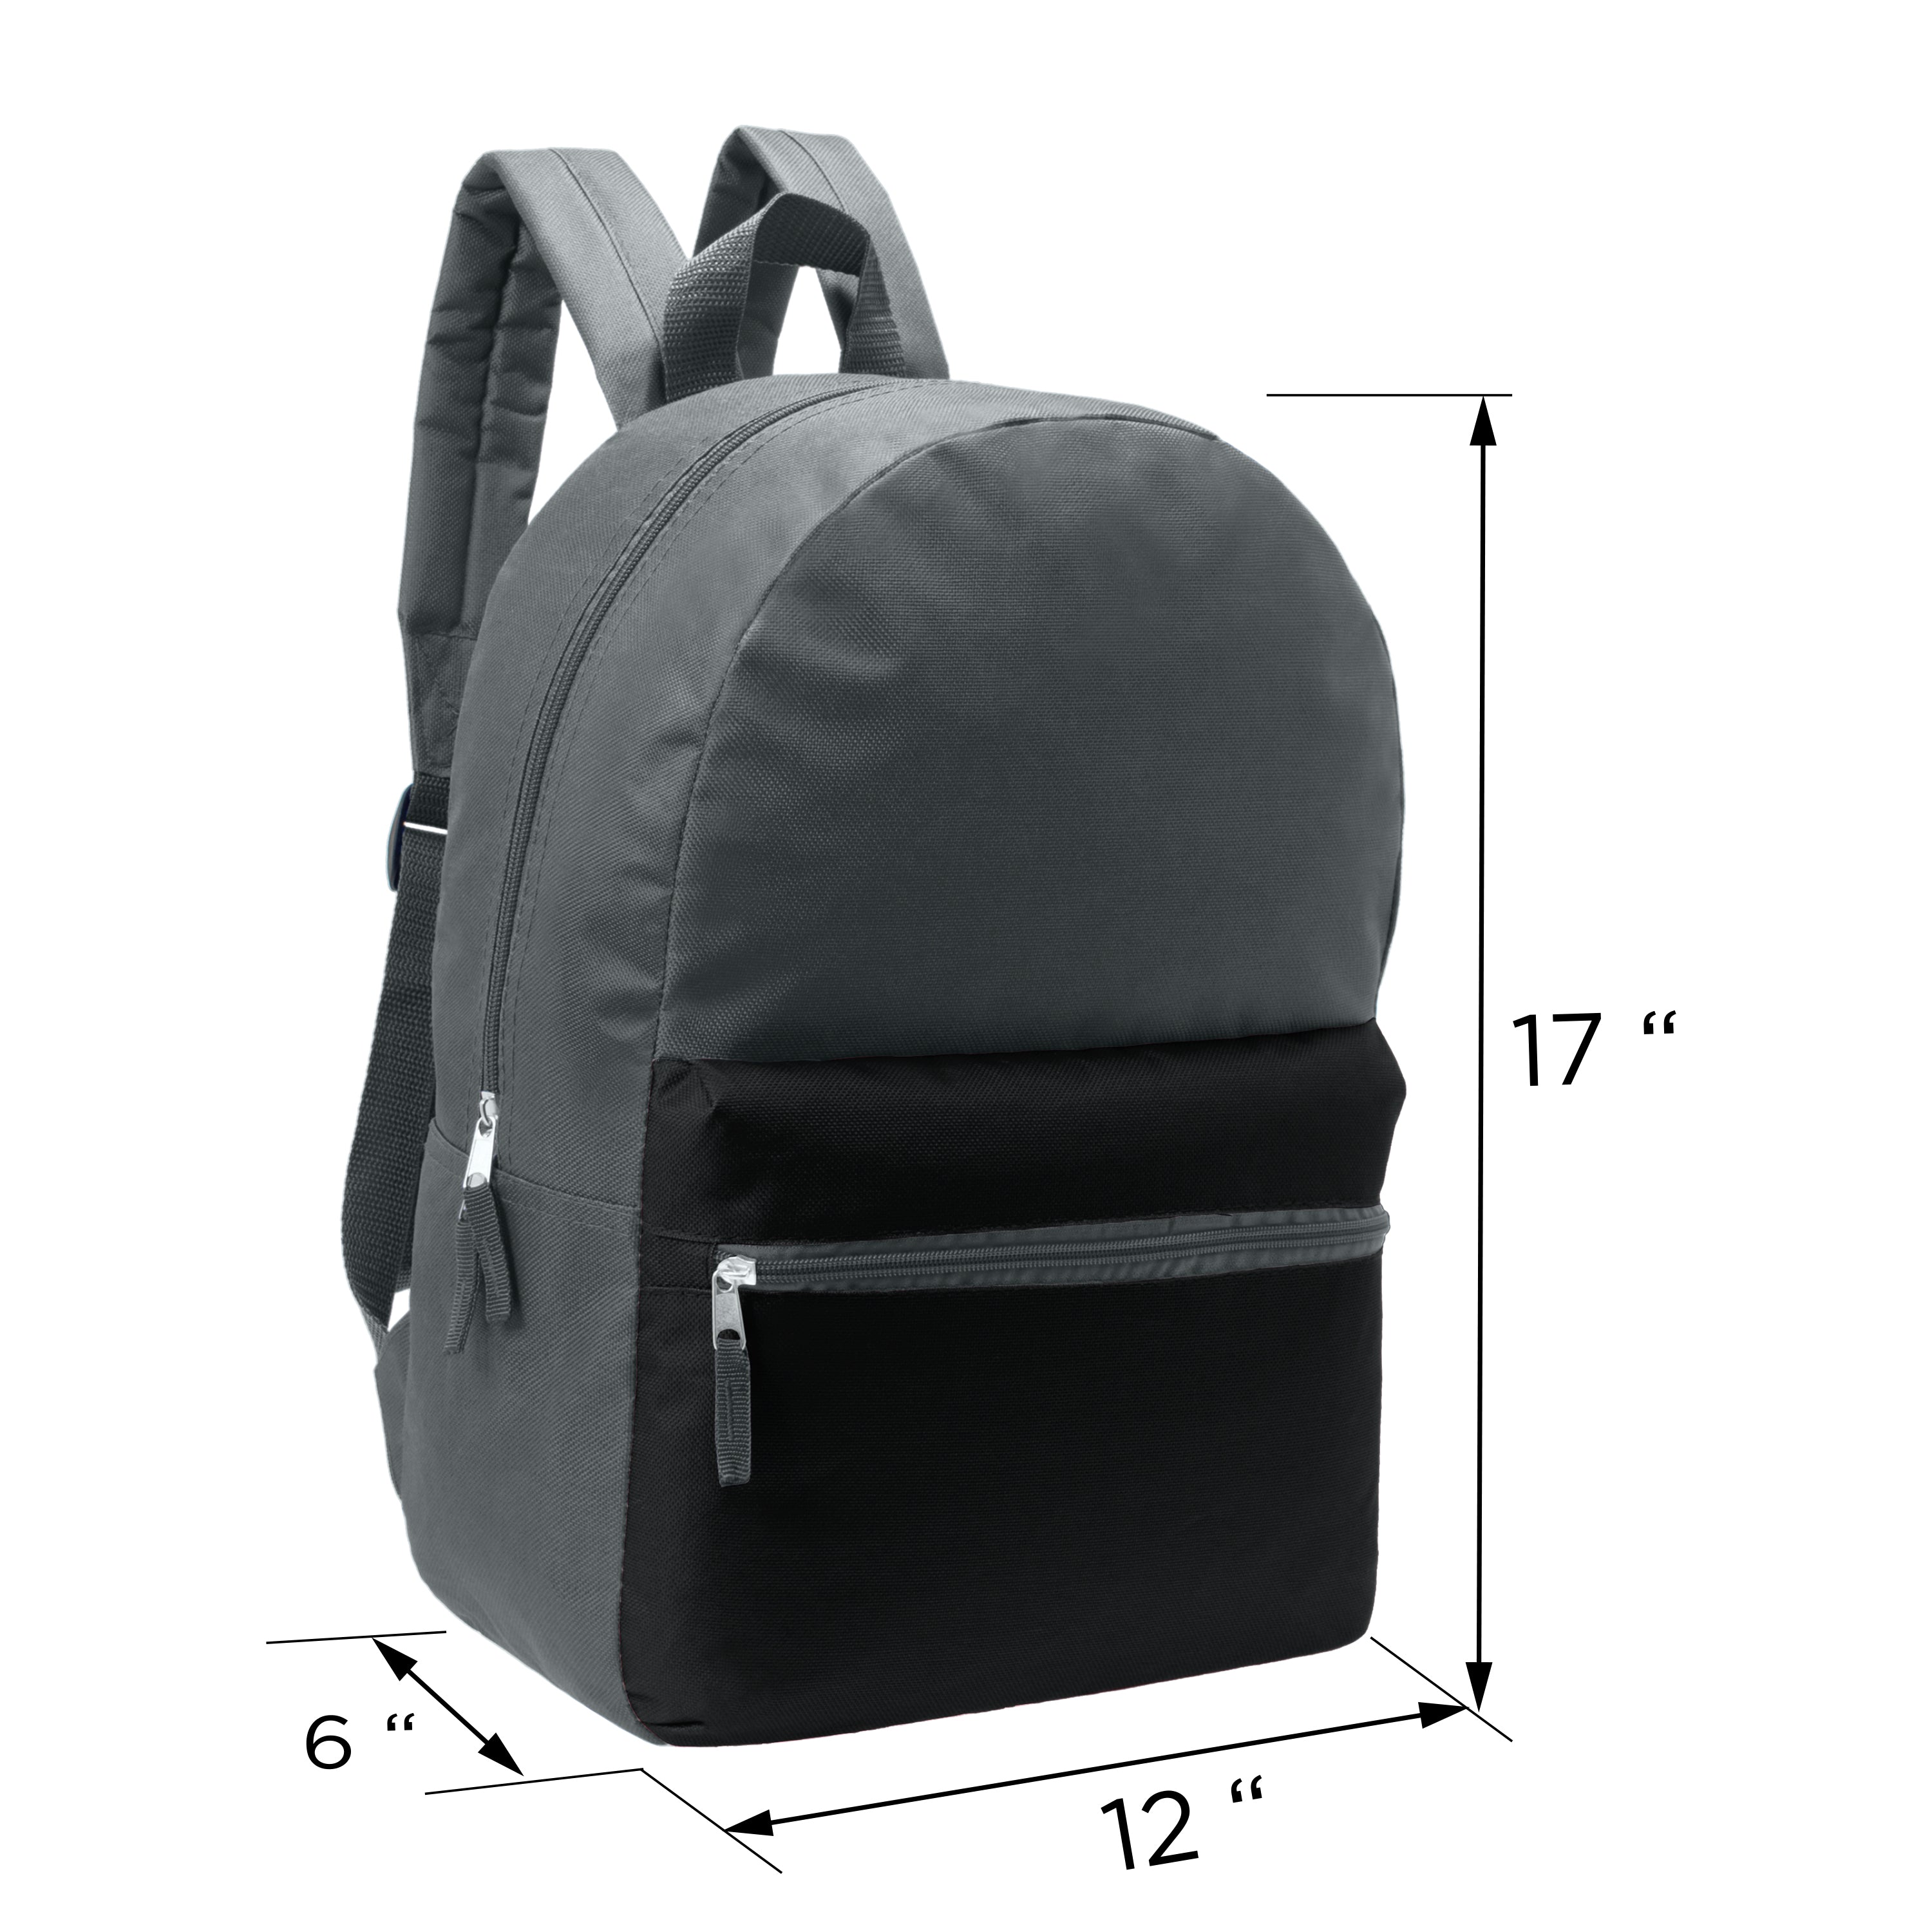 17" Kids Basic Wholesale Backpack in 6 Boy Colors 2 Tone - Bulk Case of 24 Backpacks